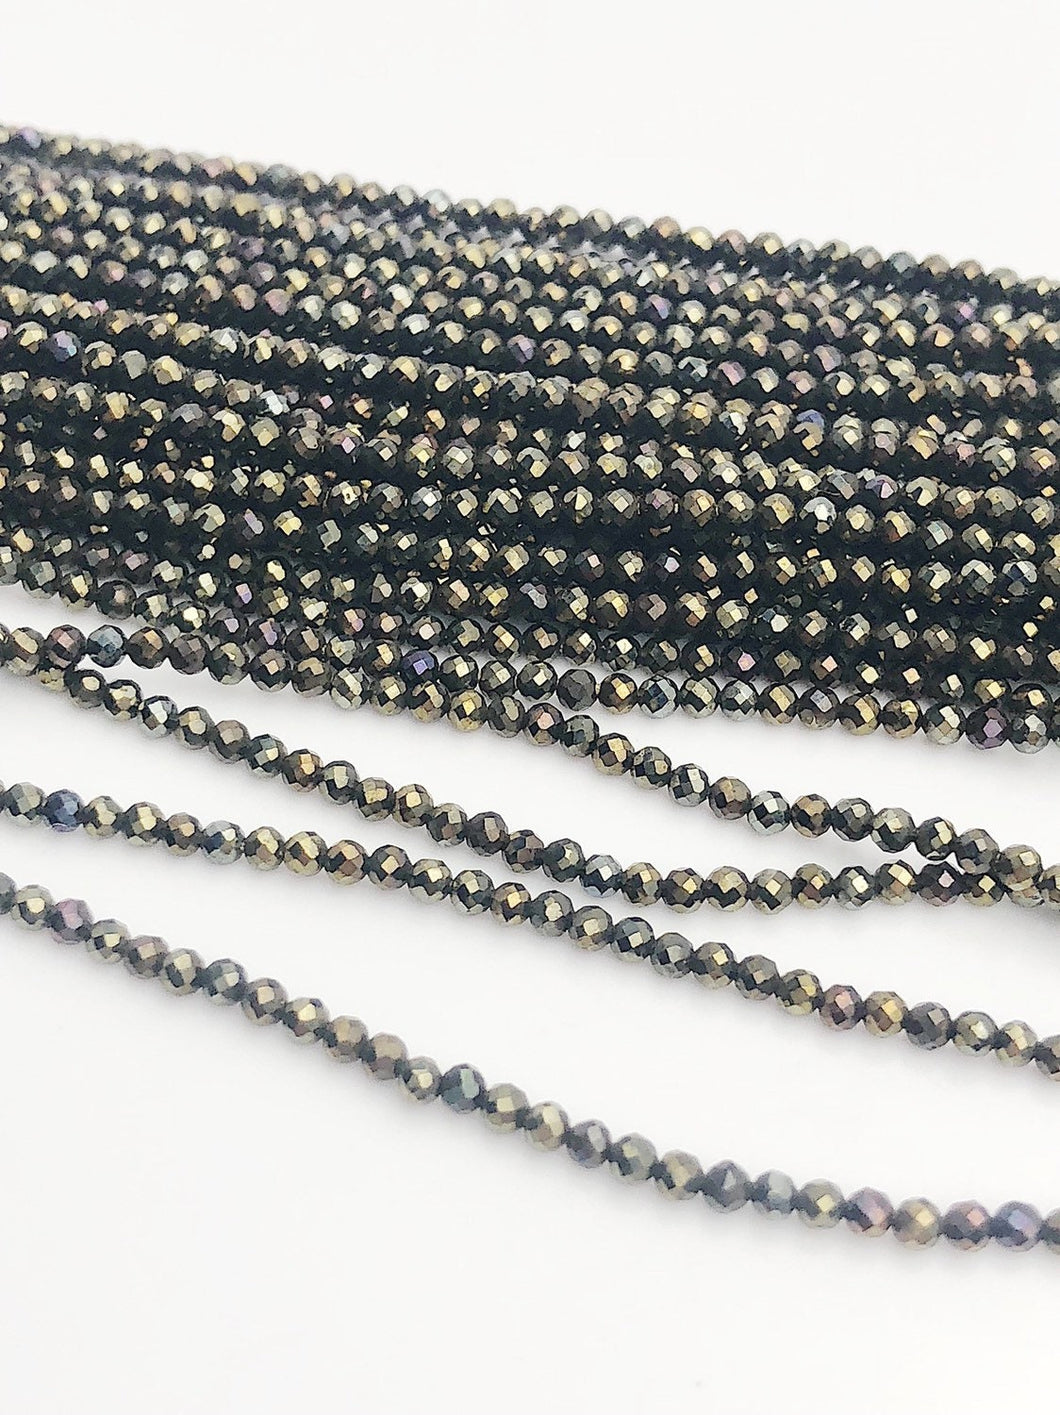 HALF OFF SALE - Coated Black Spinel Gemstone Beads, Full Strand, Semi Precious Gemstone, 13